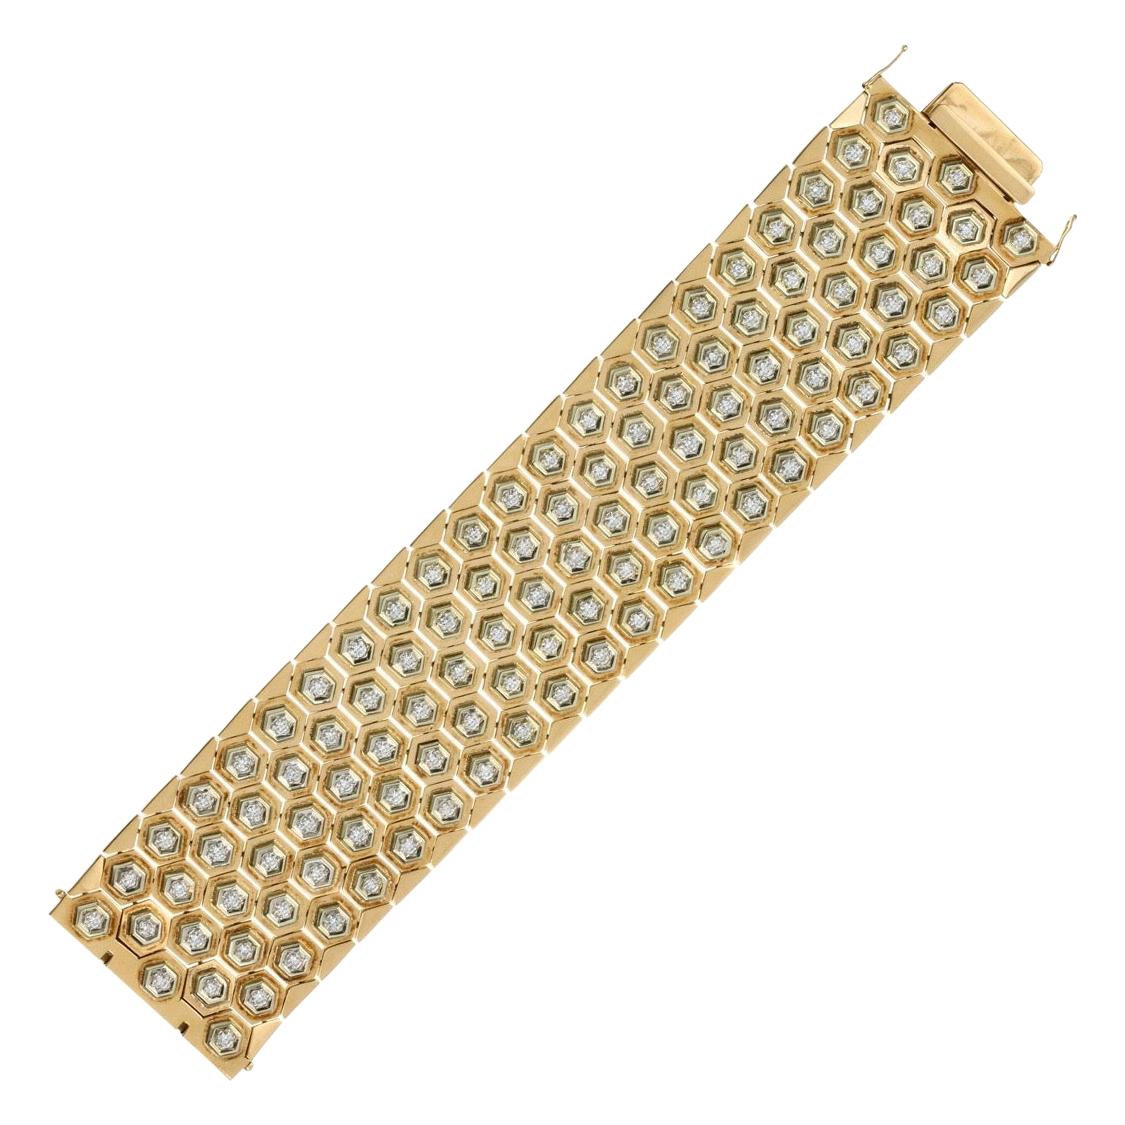 15 Carat Diamond Fancy Link Bracelet in 18 Karat Yellow Gold Hexagonal Links